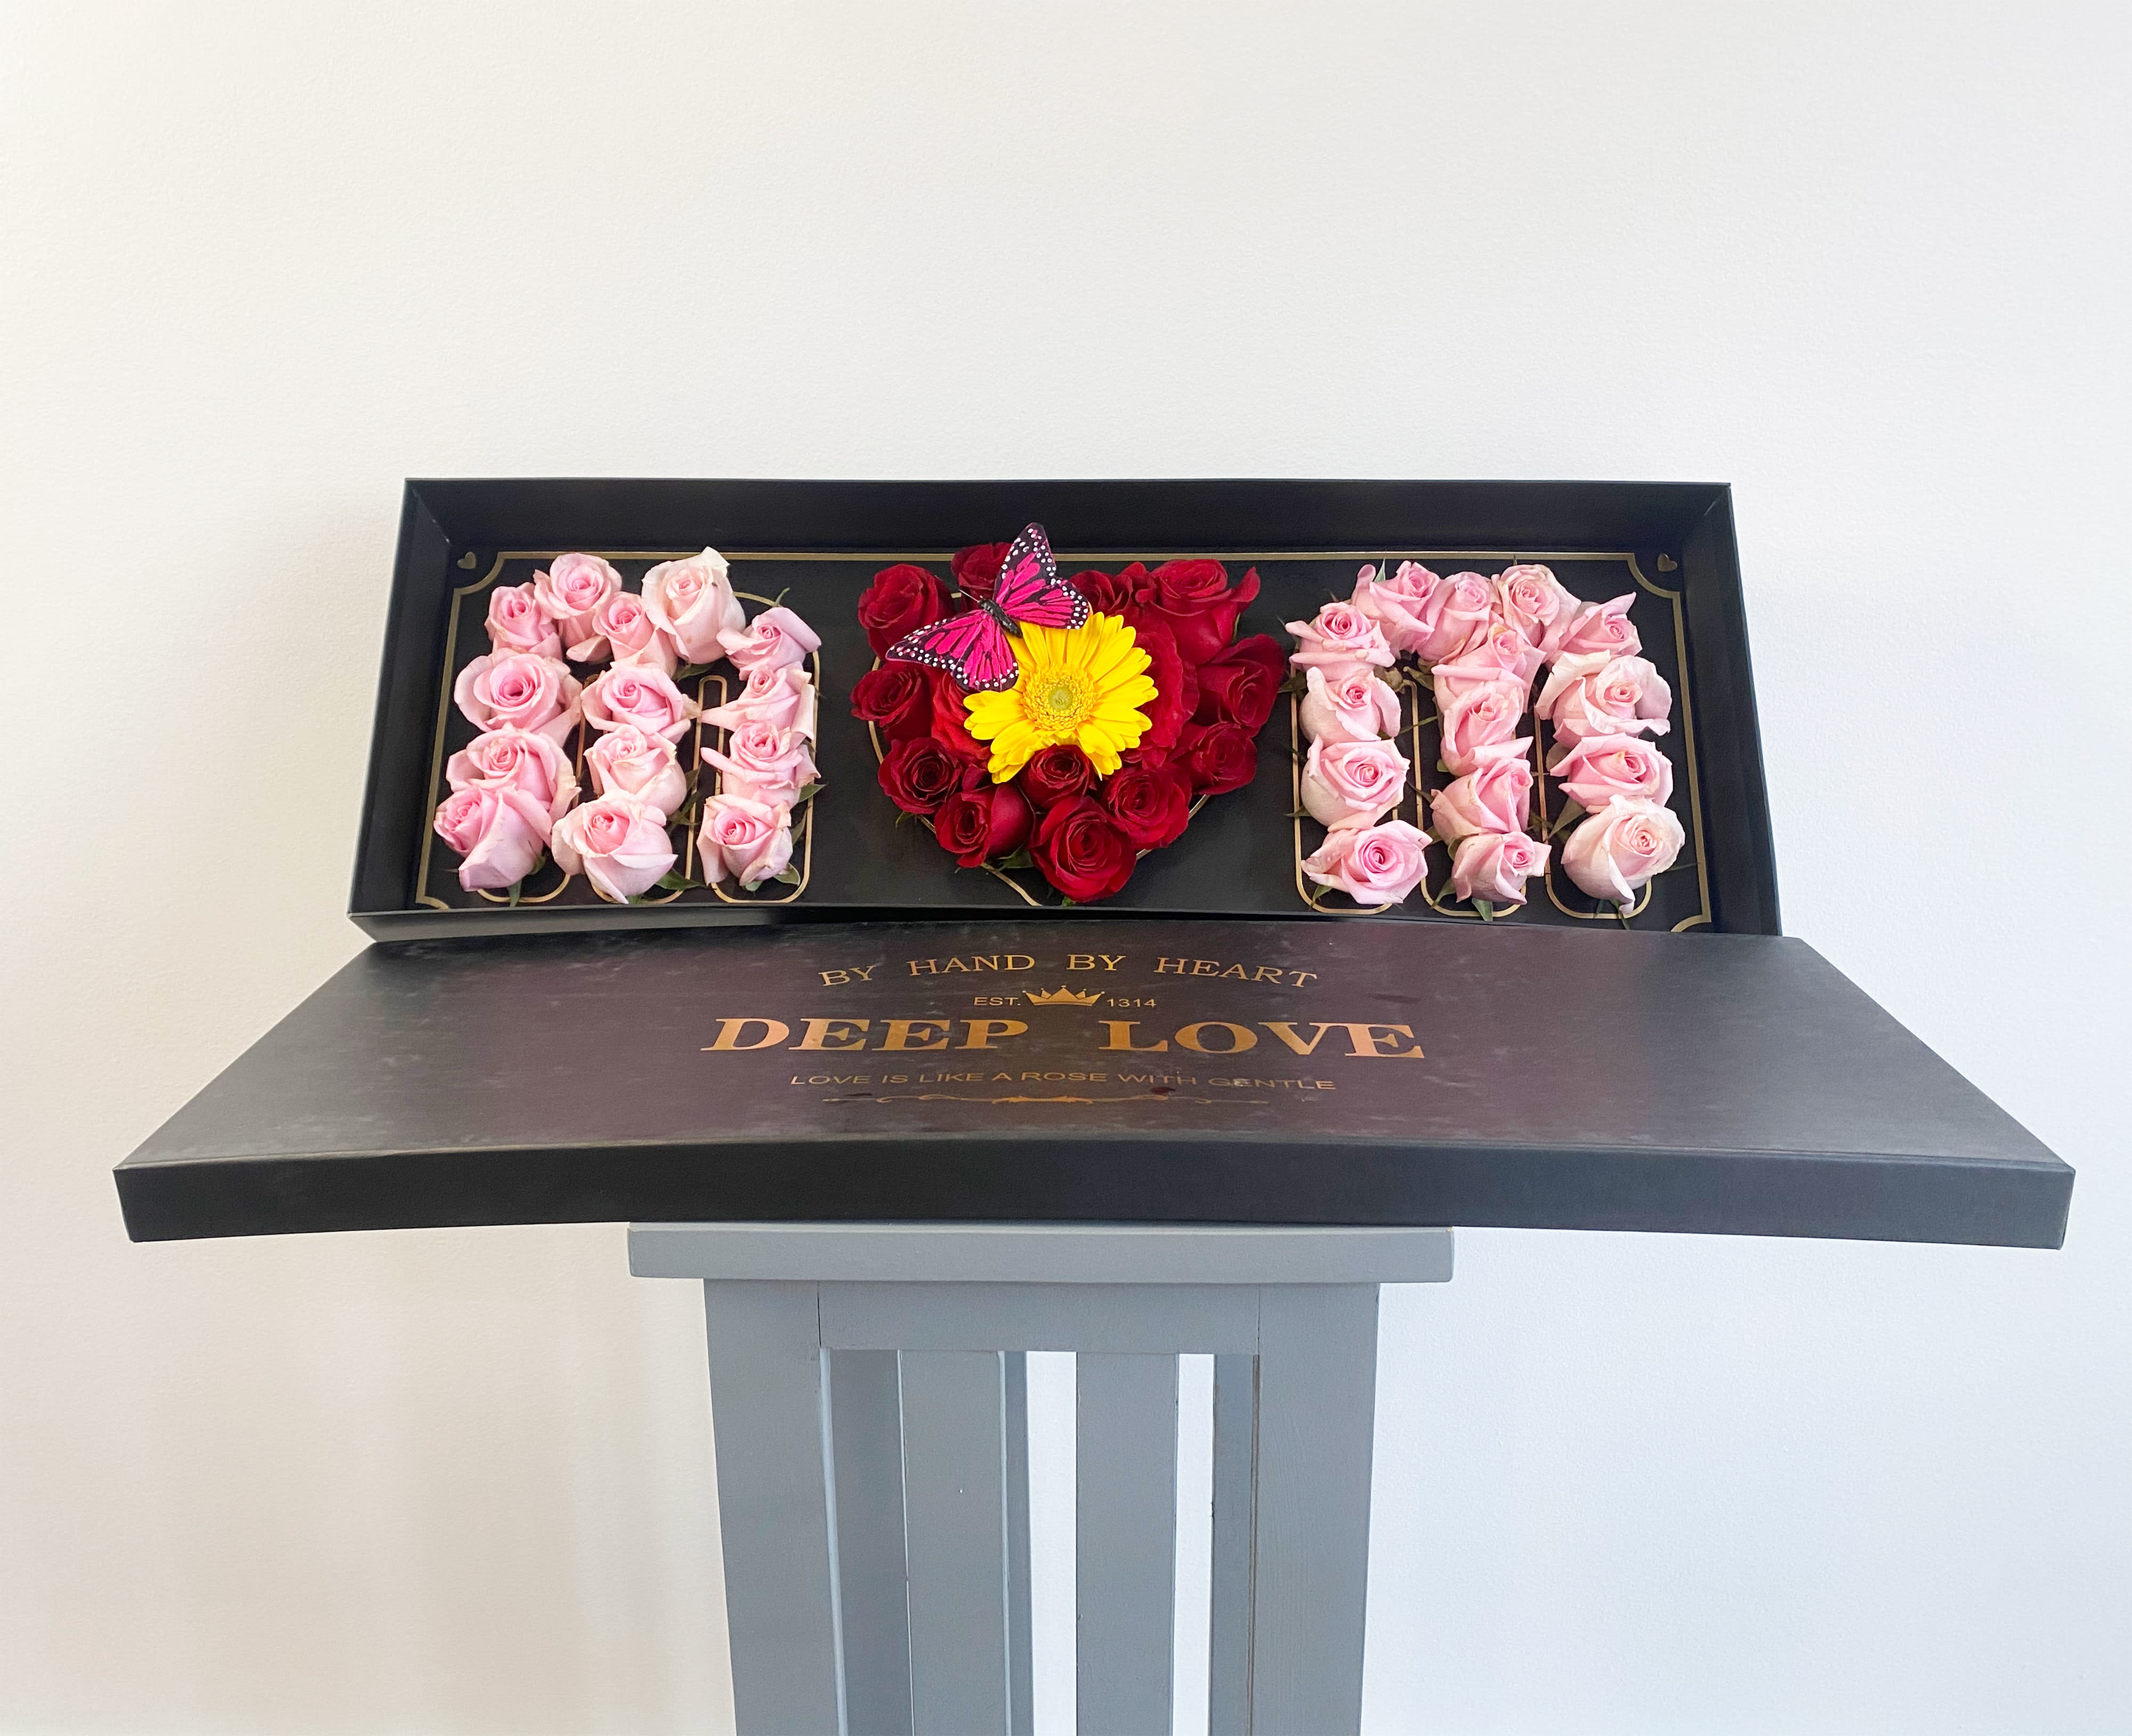 deep love flower box